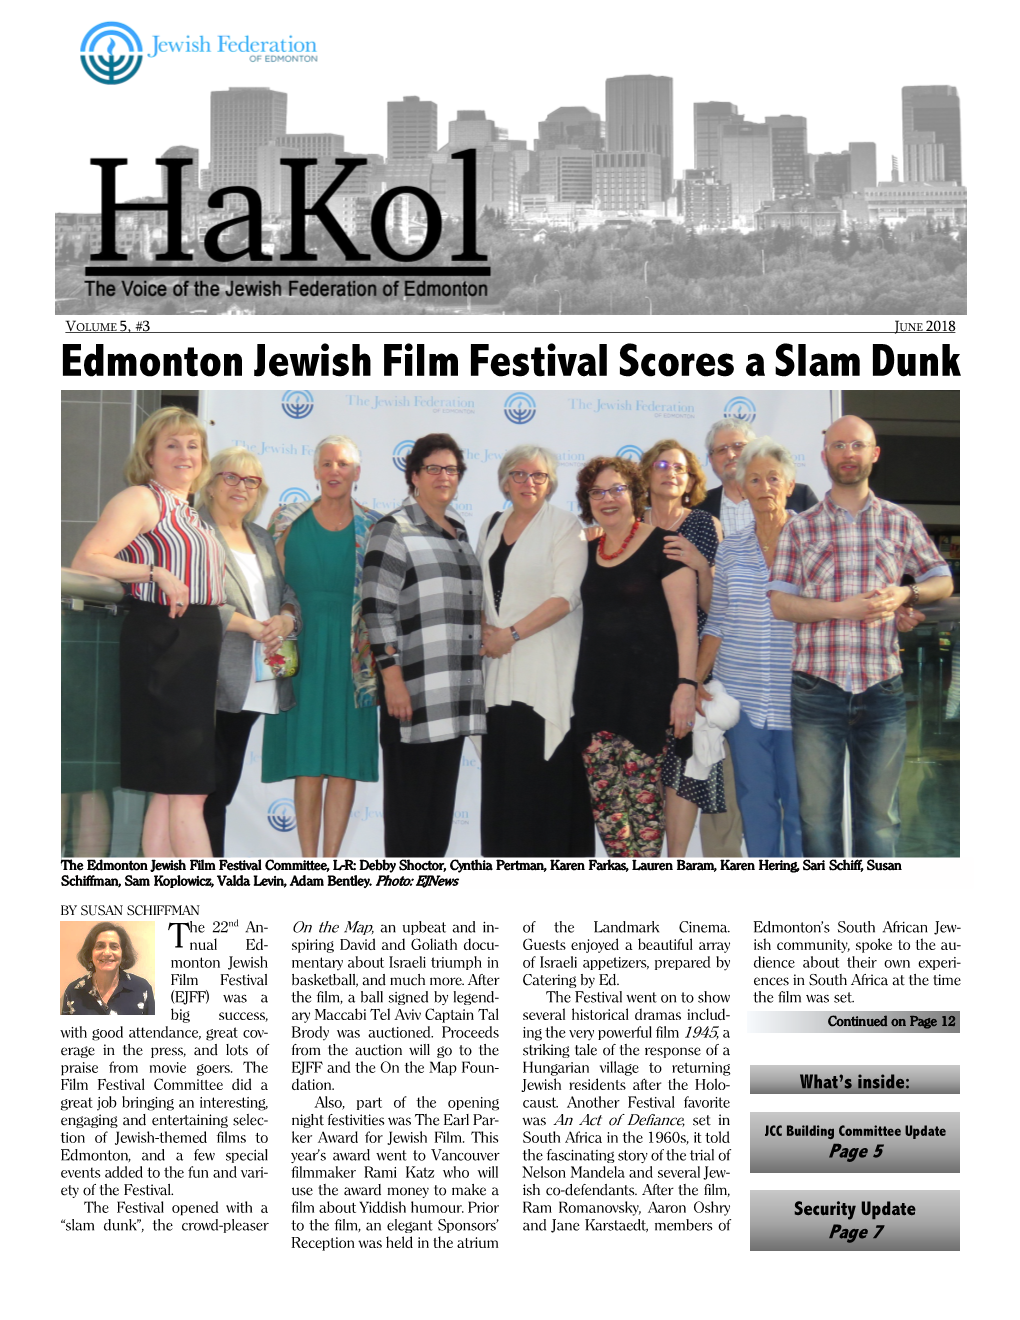 Edmonton Jewish Film Festival Scores a Slam Dunk